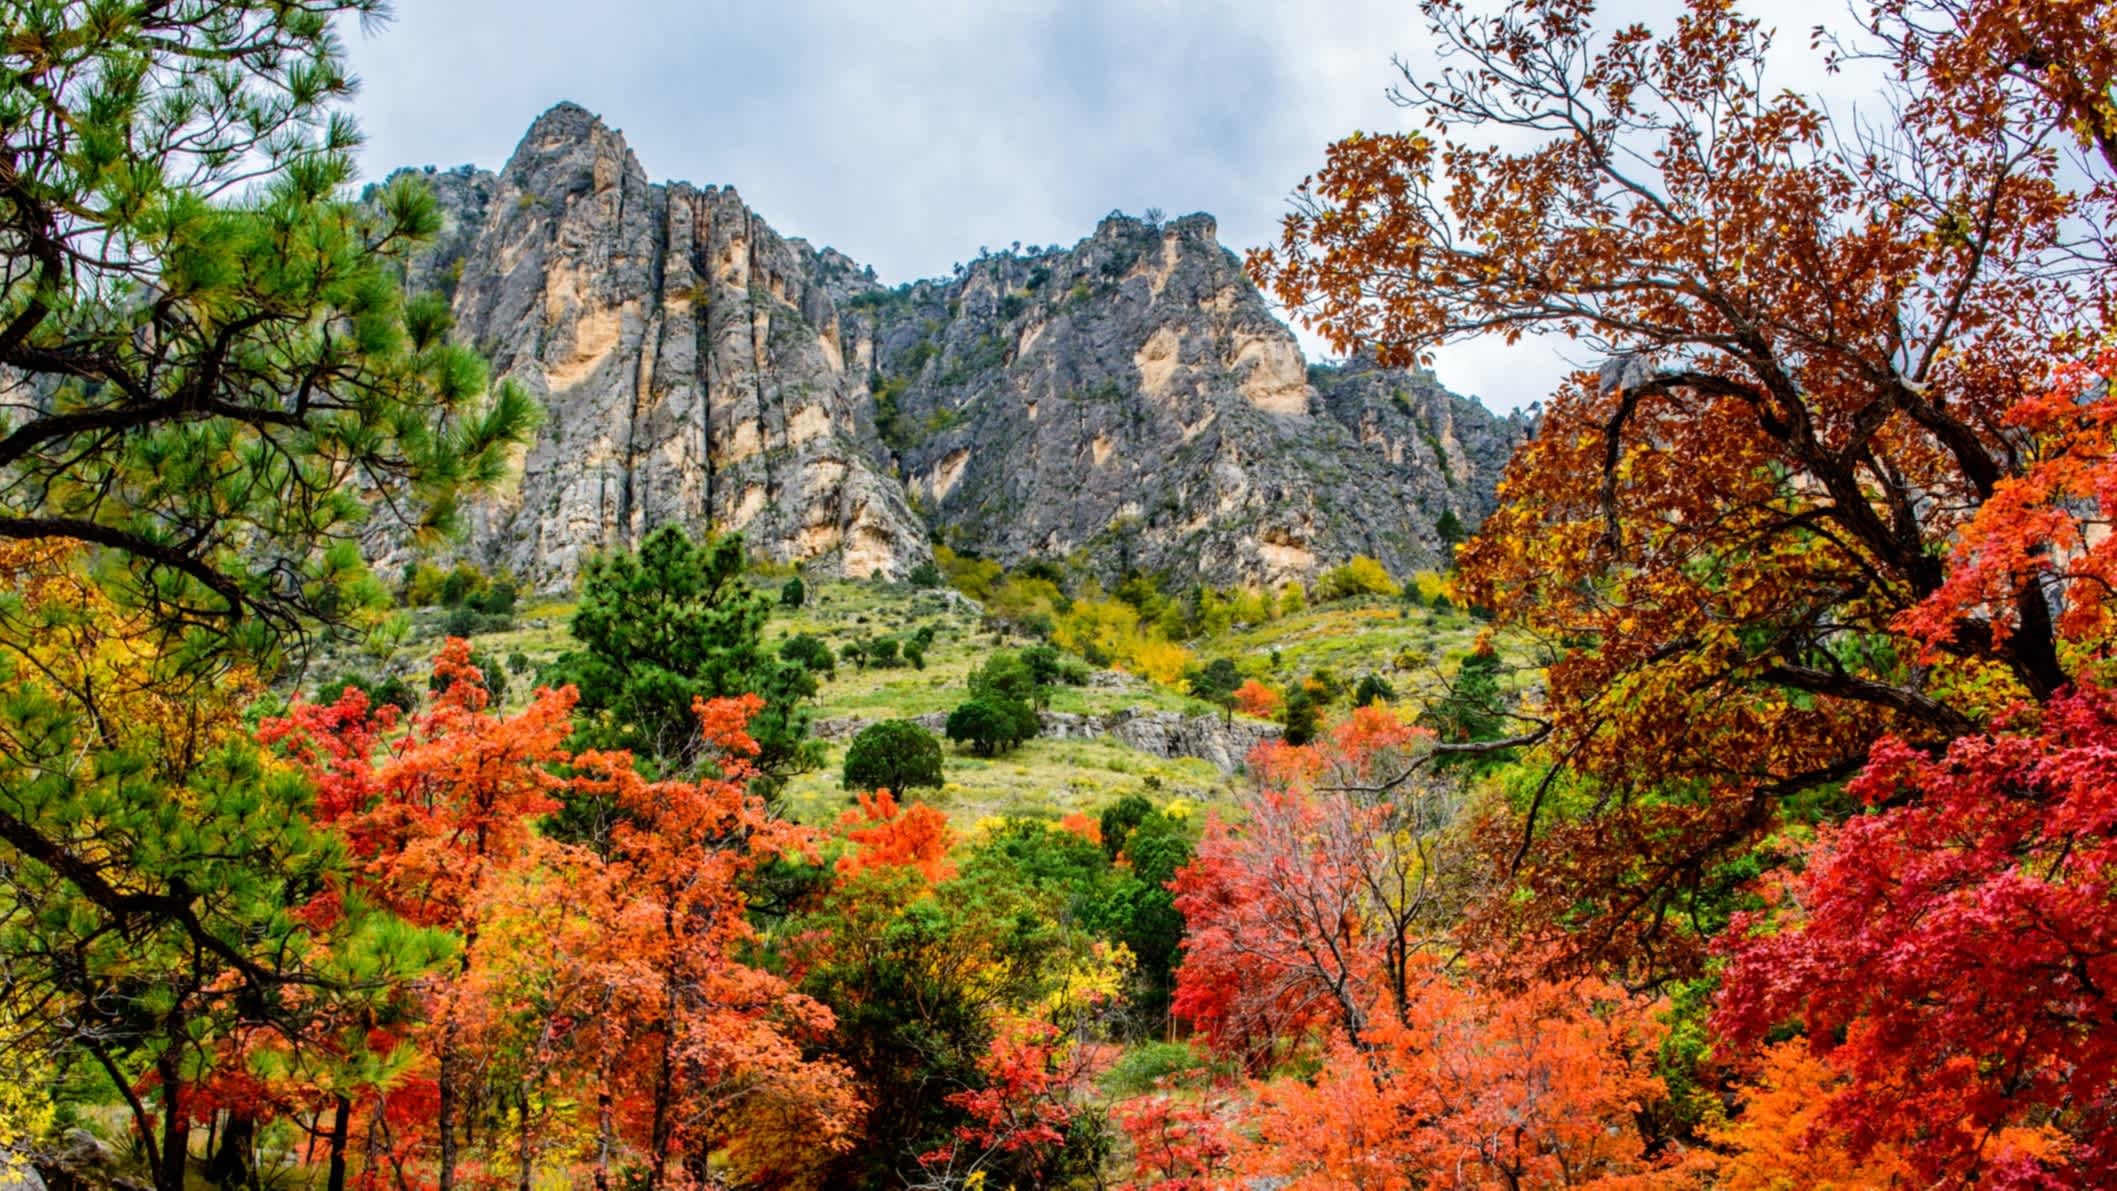 Herbstfarben entlang des Pine Canyon, Guadalupe Mountains National Park, Texas, USA
